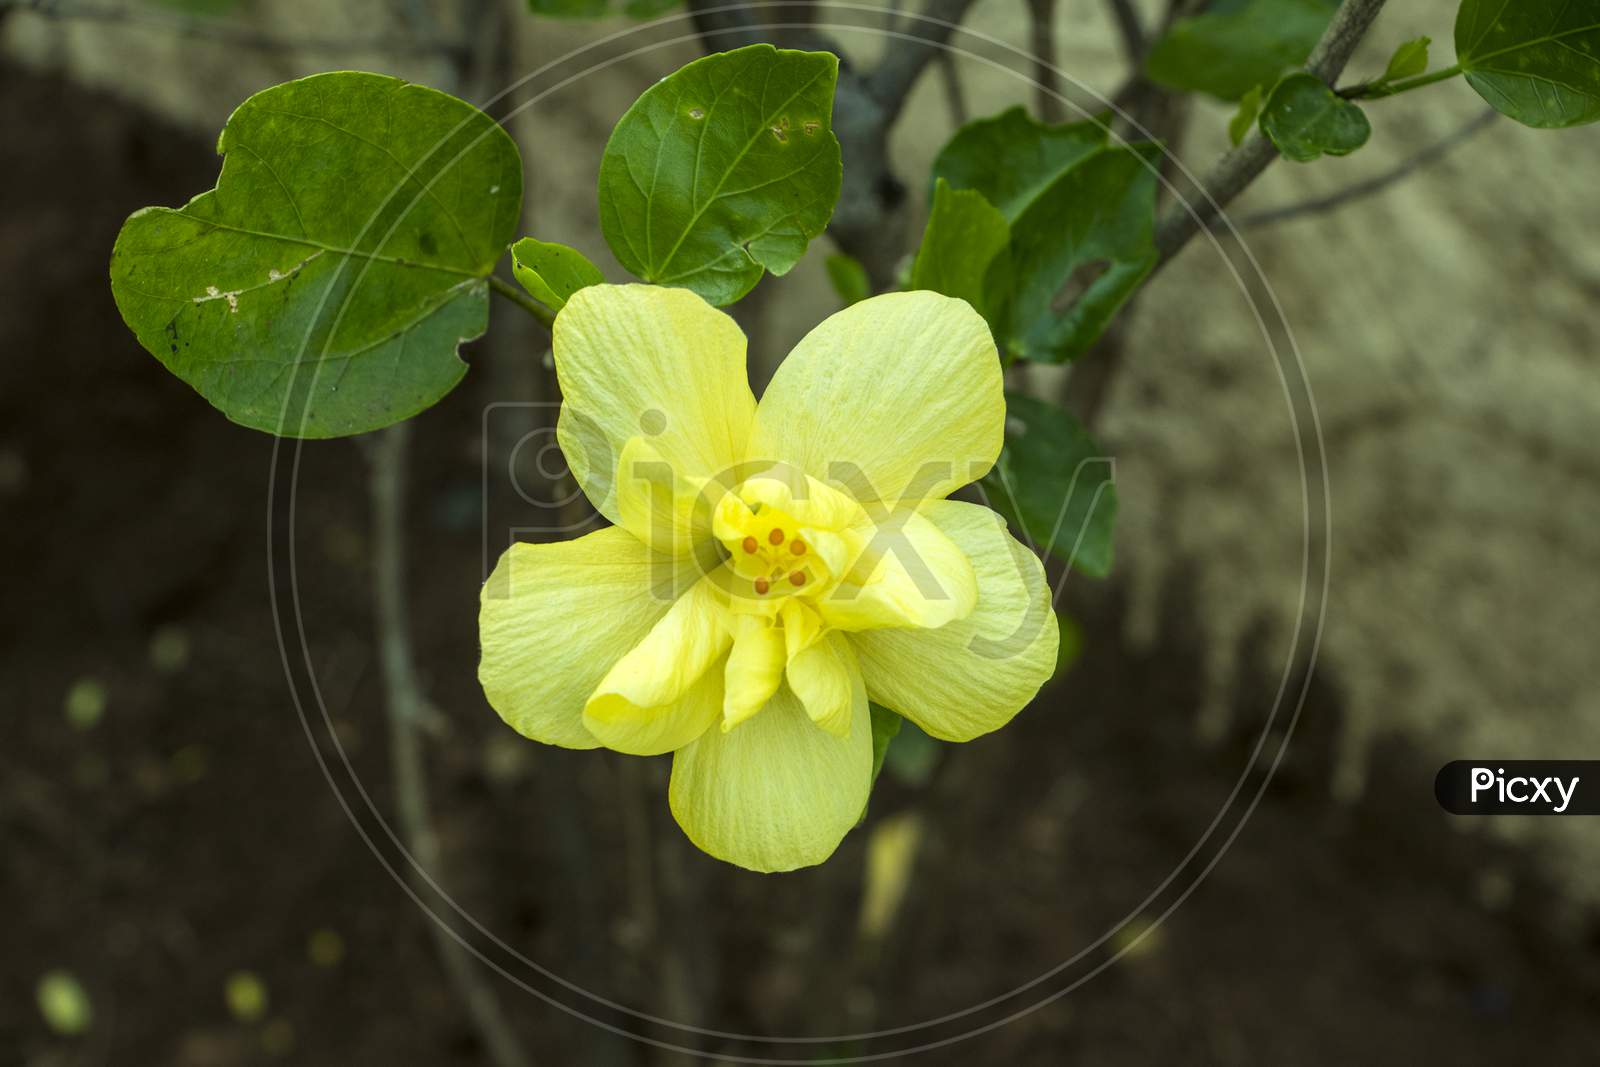 Jasvandi Flower with beauty